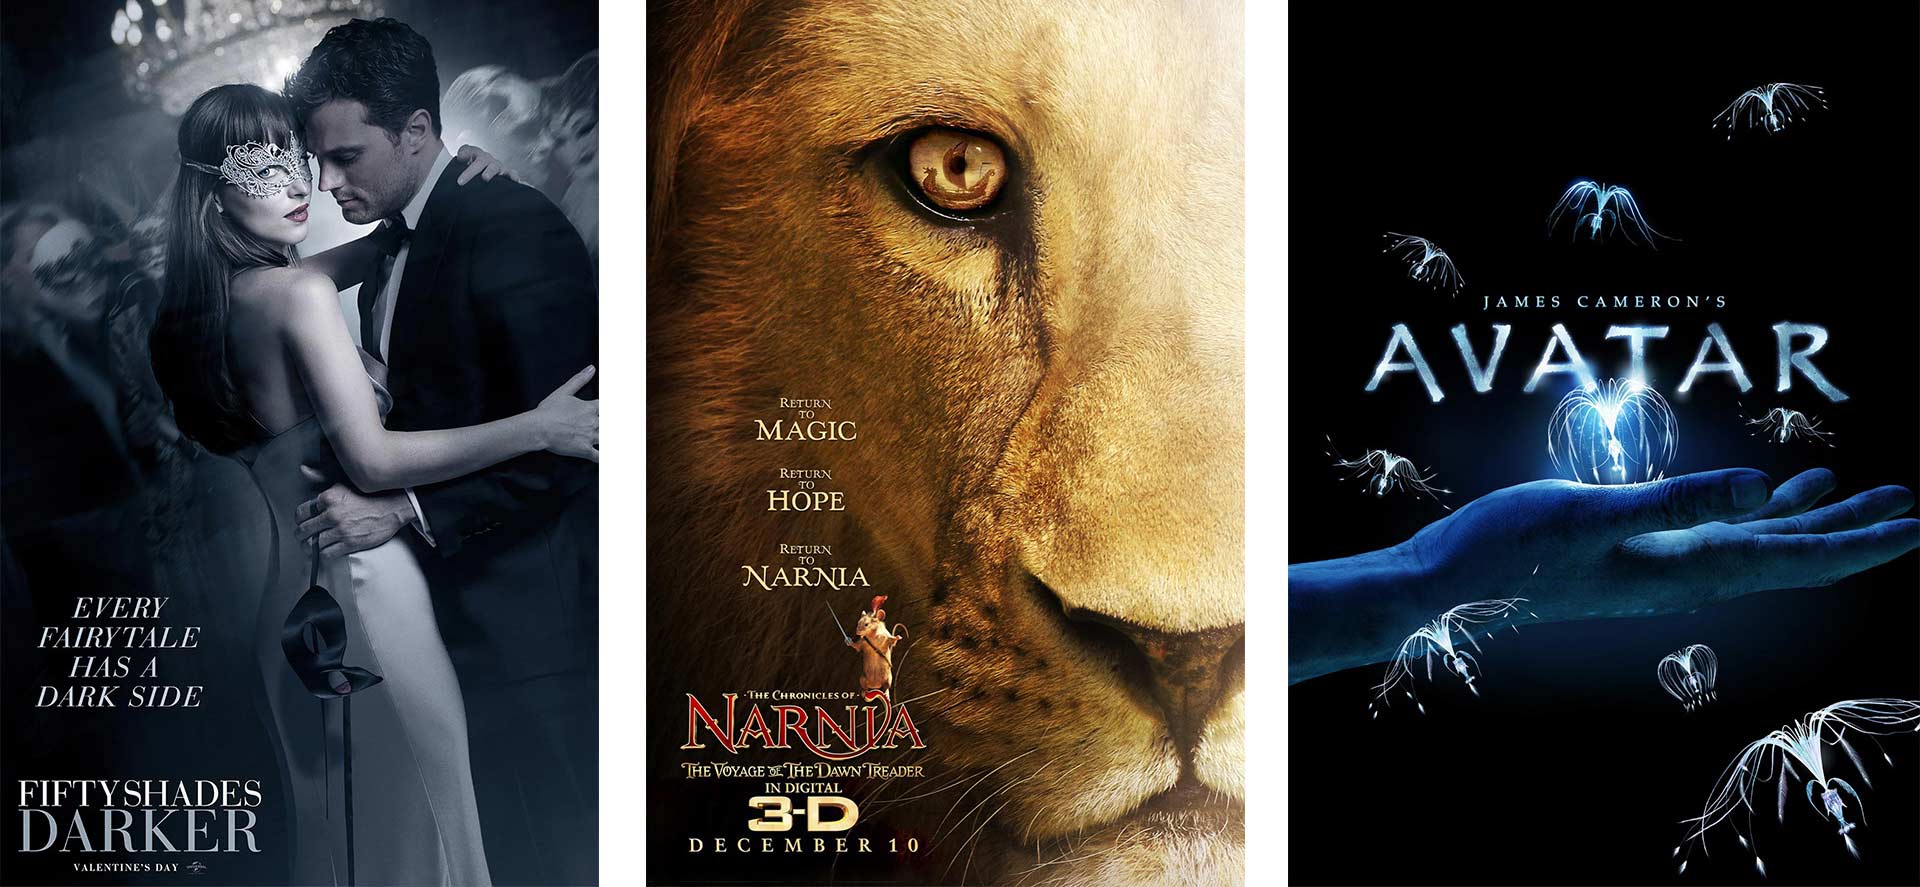 Avatar, Narnia serisi, Fifty Shades Darker... Emrah Yücel'in işlerinden bazı örnekler